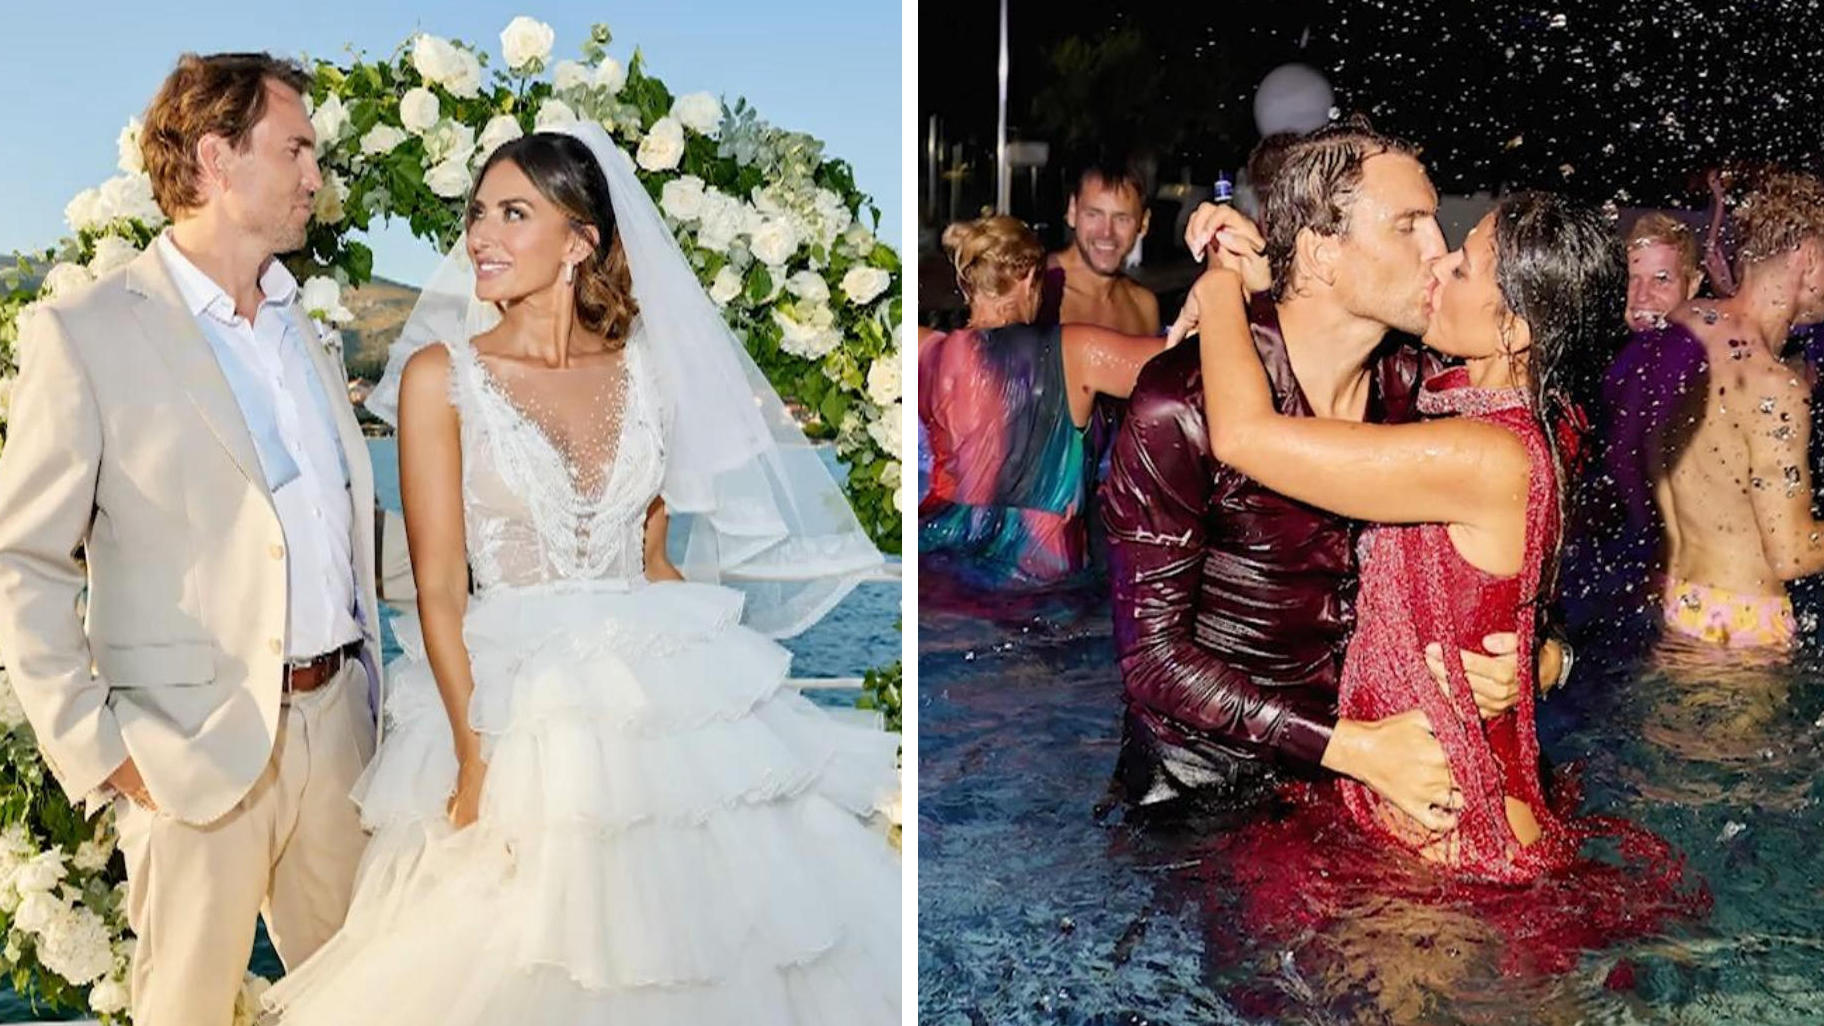 Jana Azizi celebrates her dream wedding in Croatia RTL presenter said yes!